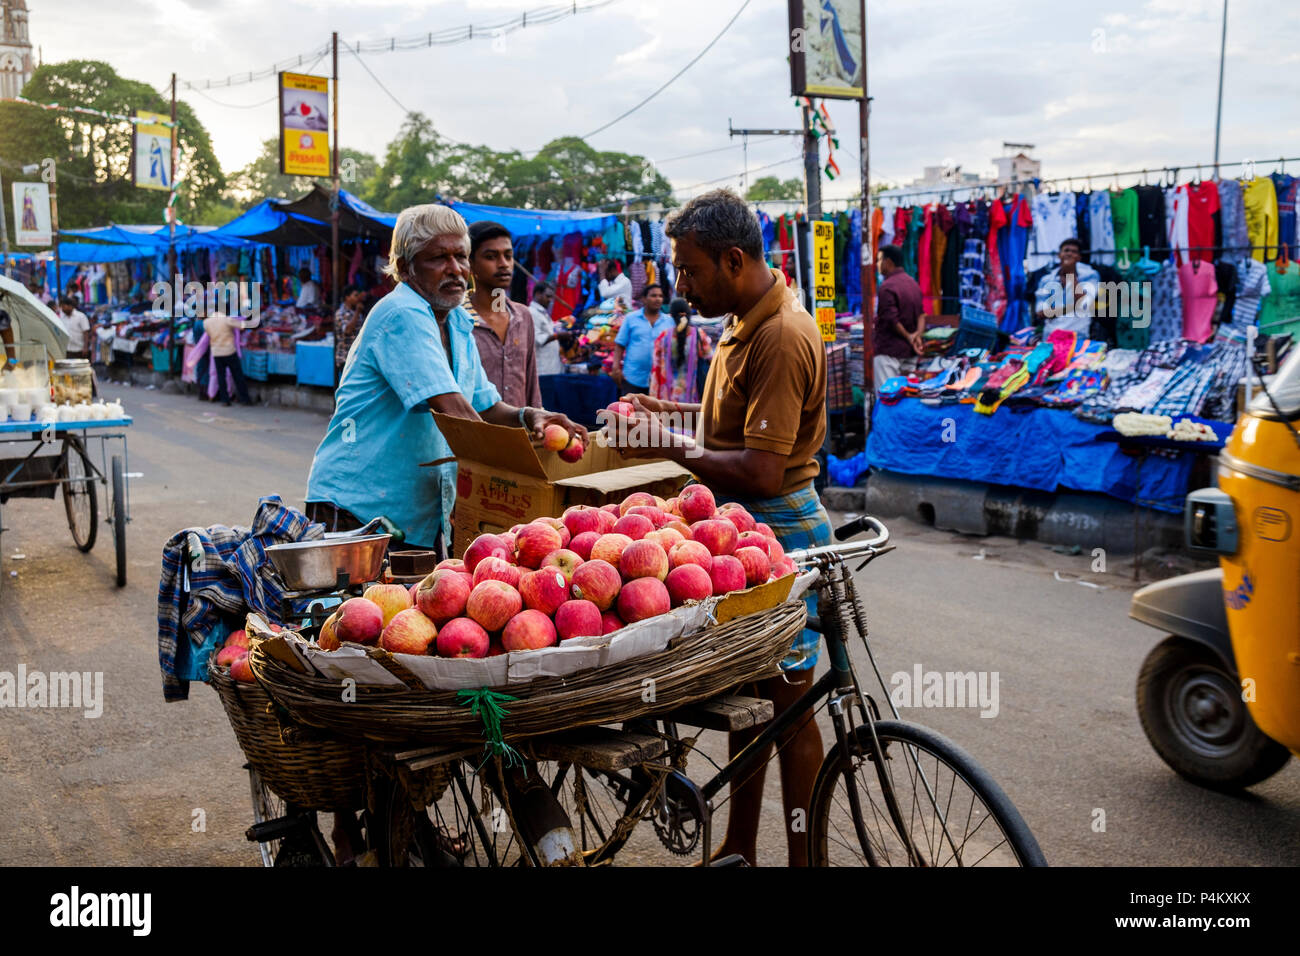 Indian men selling and buying apples at the street market on Netaji Subhas Chandra Bose Rd, Tiruchirappalli (Trichy), Tamil Nadu, India. Stock Photo